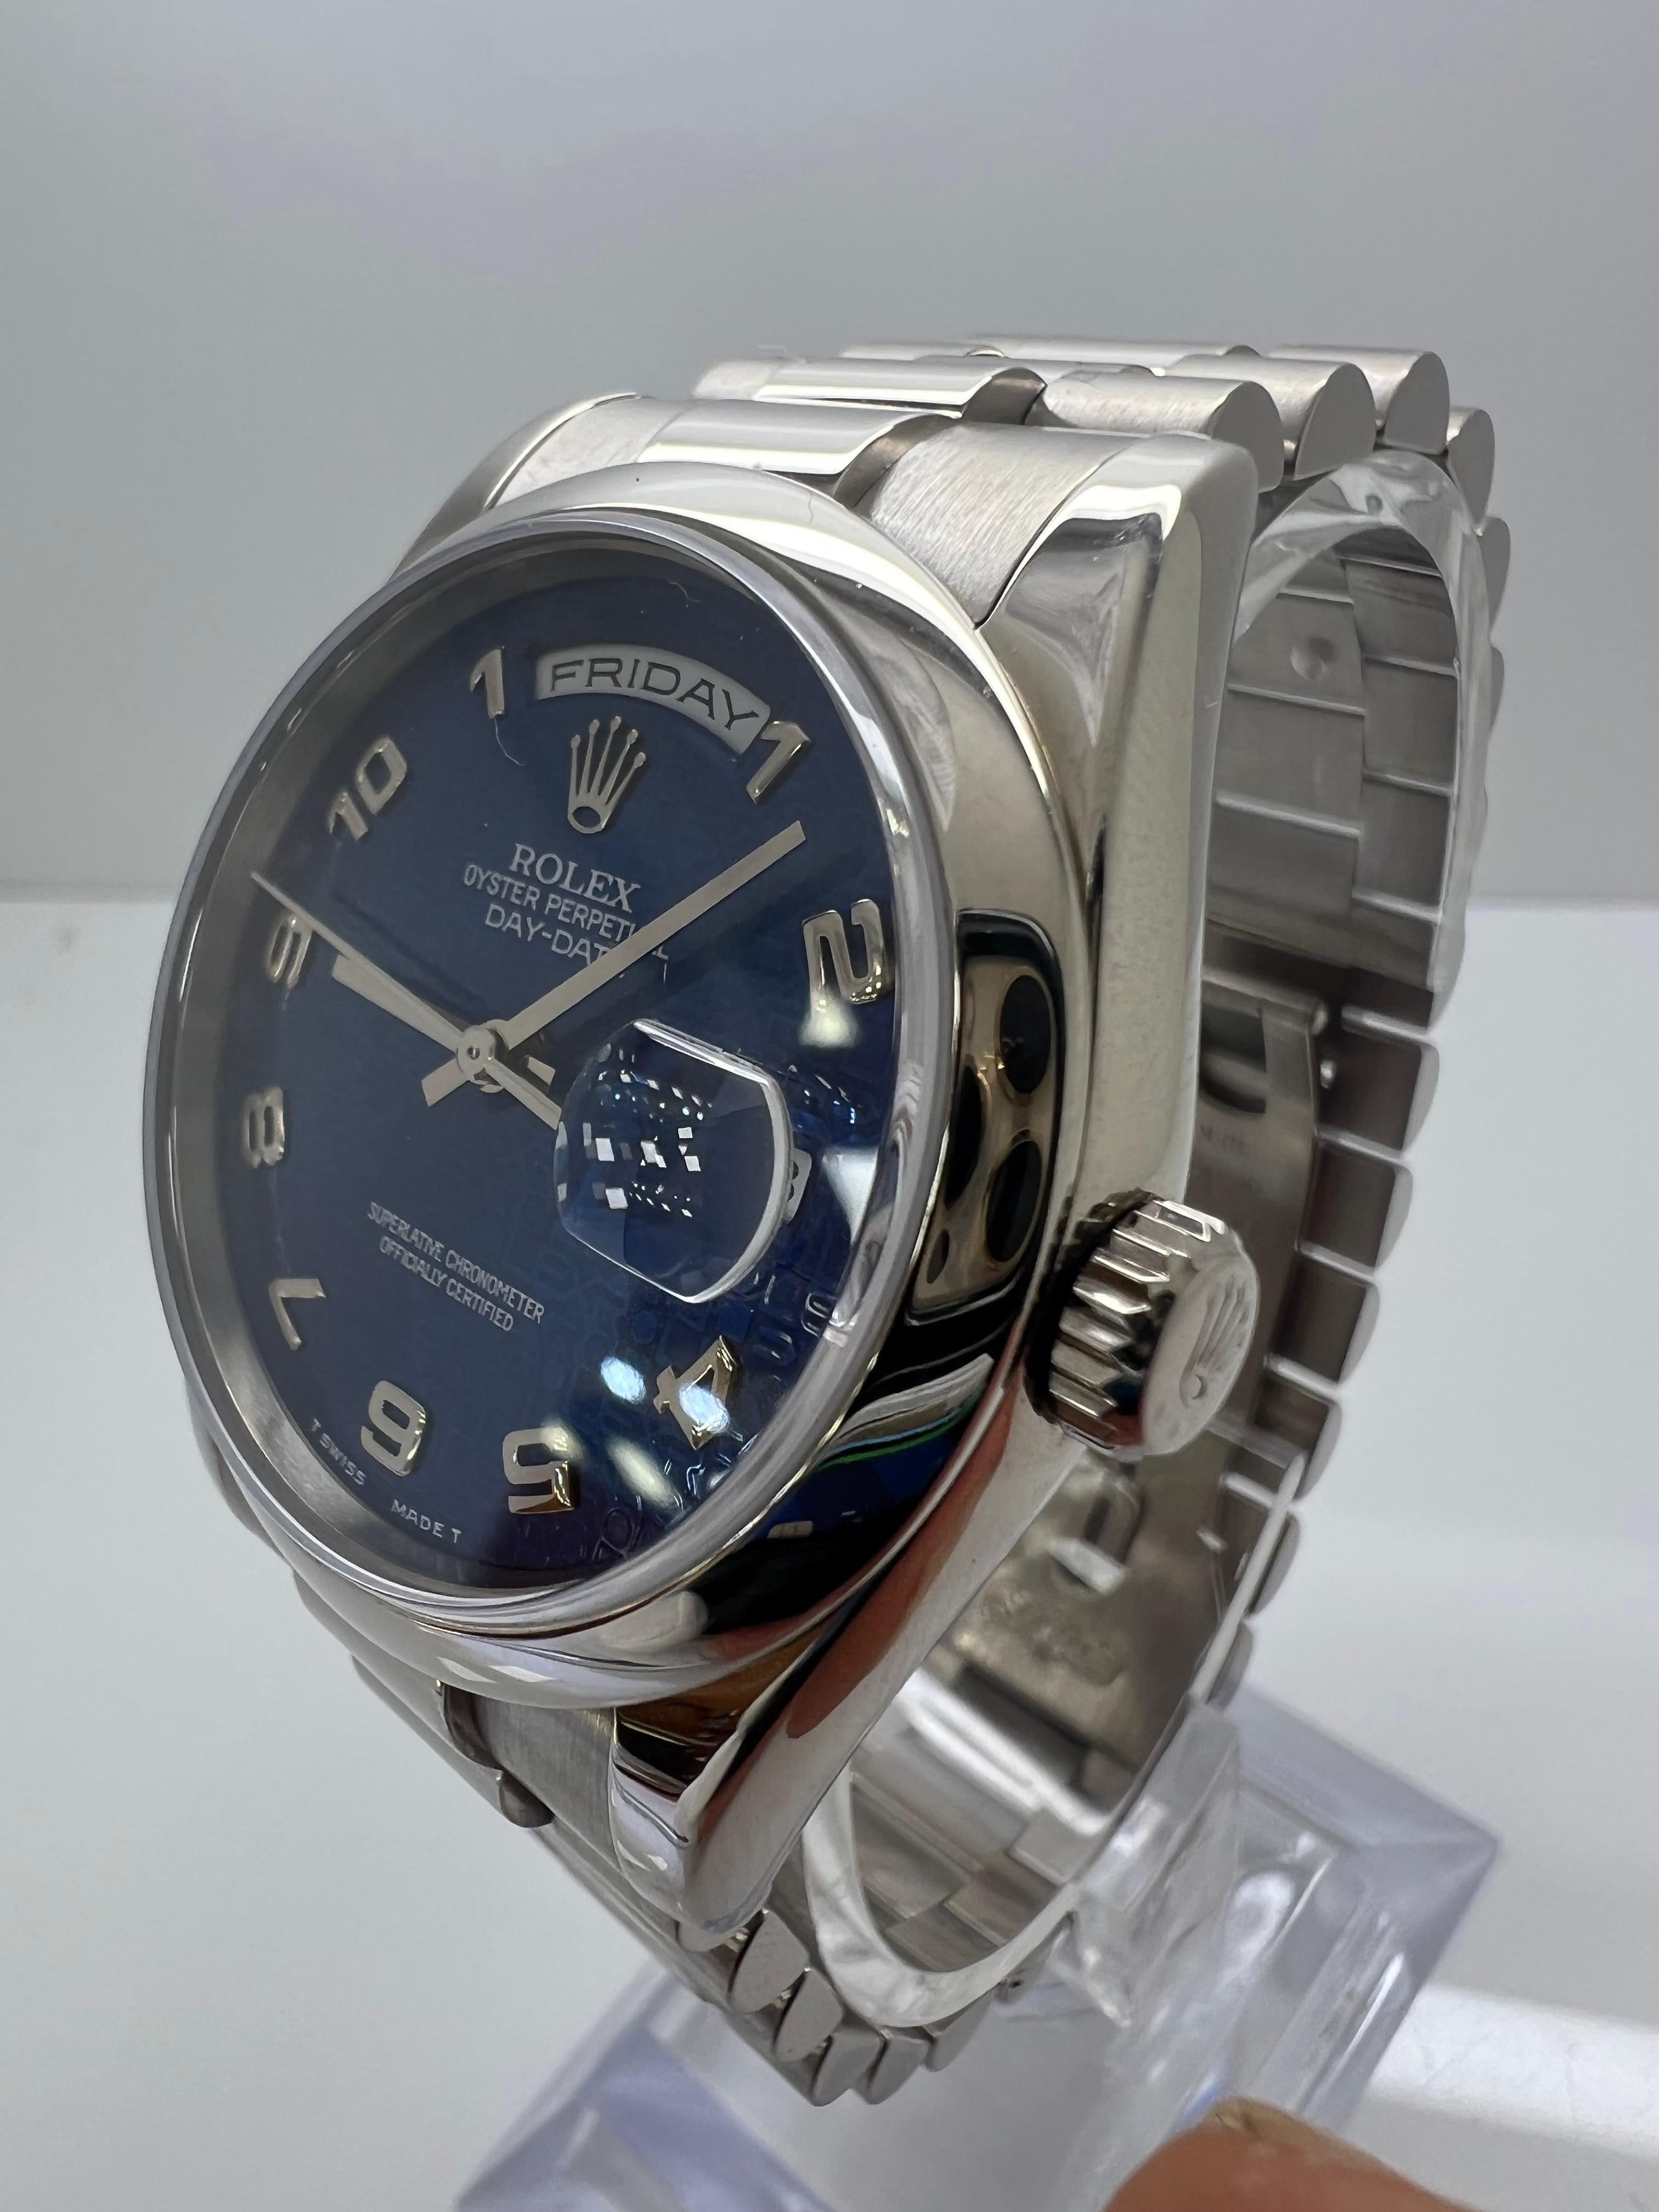 Rolex Day-Date 36mm Royal Arabic Blue Rare! 

All original Rolex Parts

excellent condition

original box papers

circa: 2003

Rare dial!!

shop with confidence

Evitadiamonds